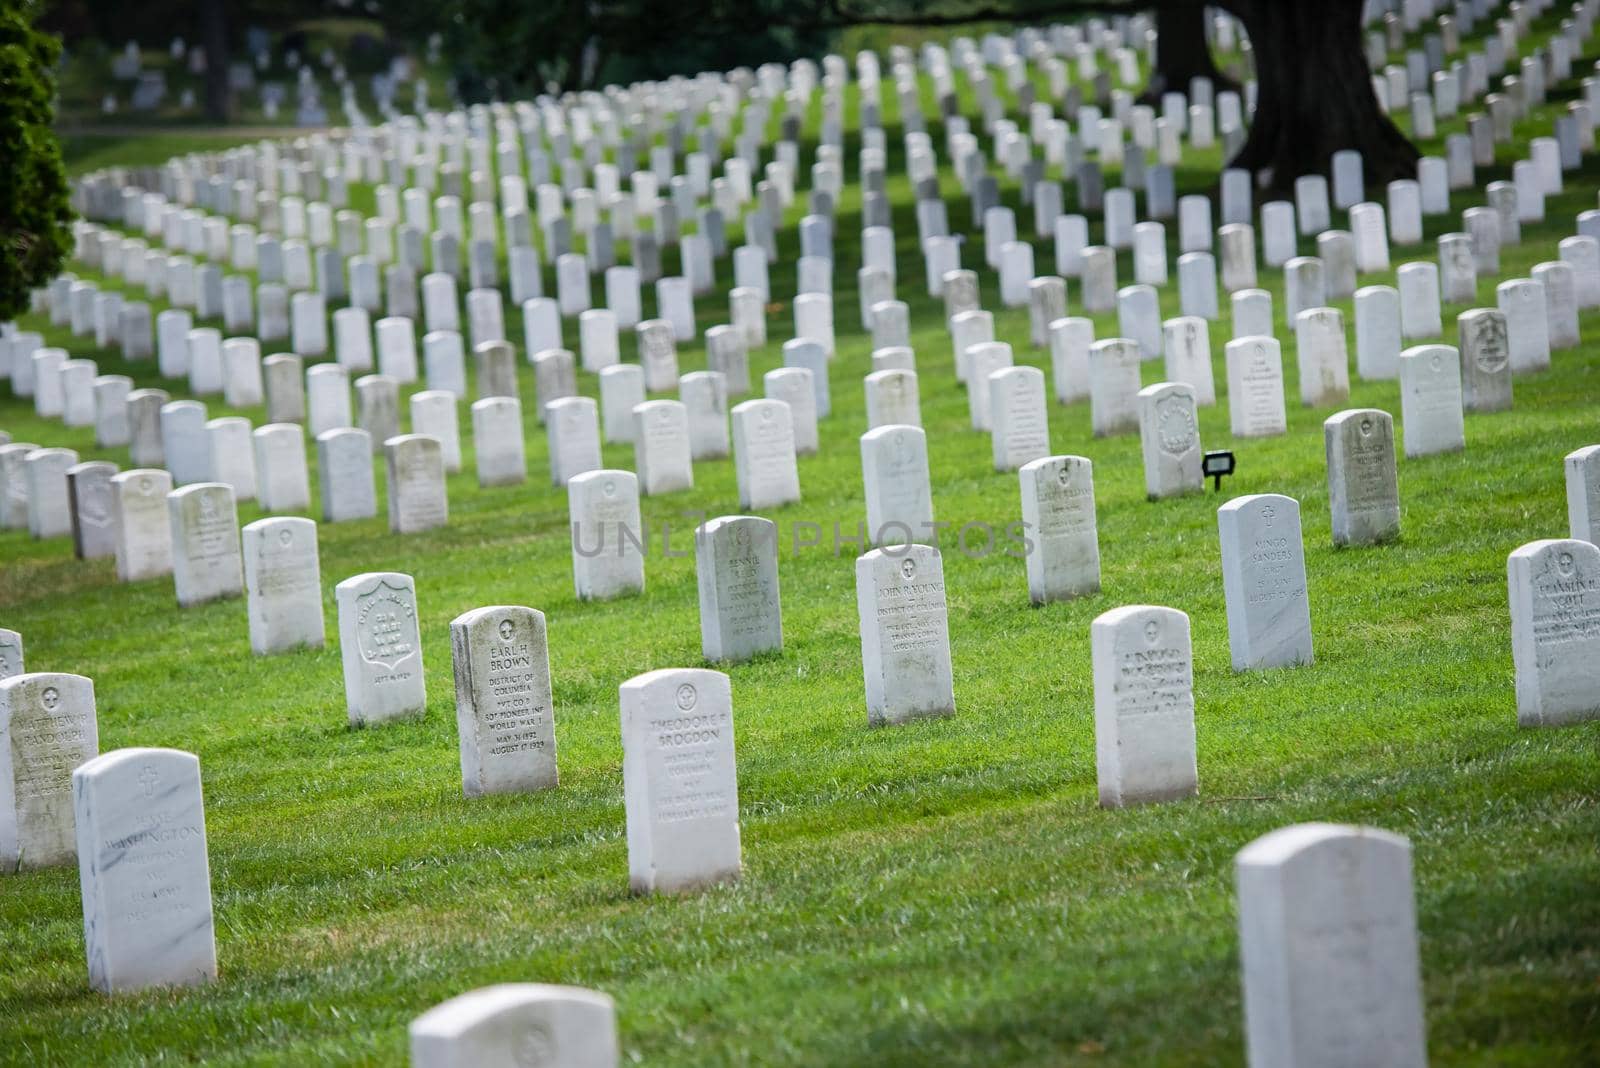 Gravestones at Arlington National Cemetery in Virginia by jyurinko